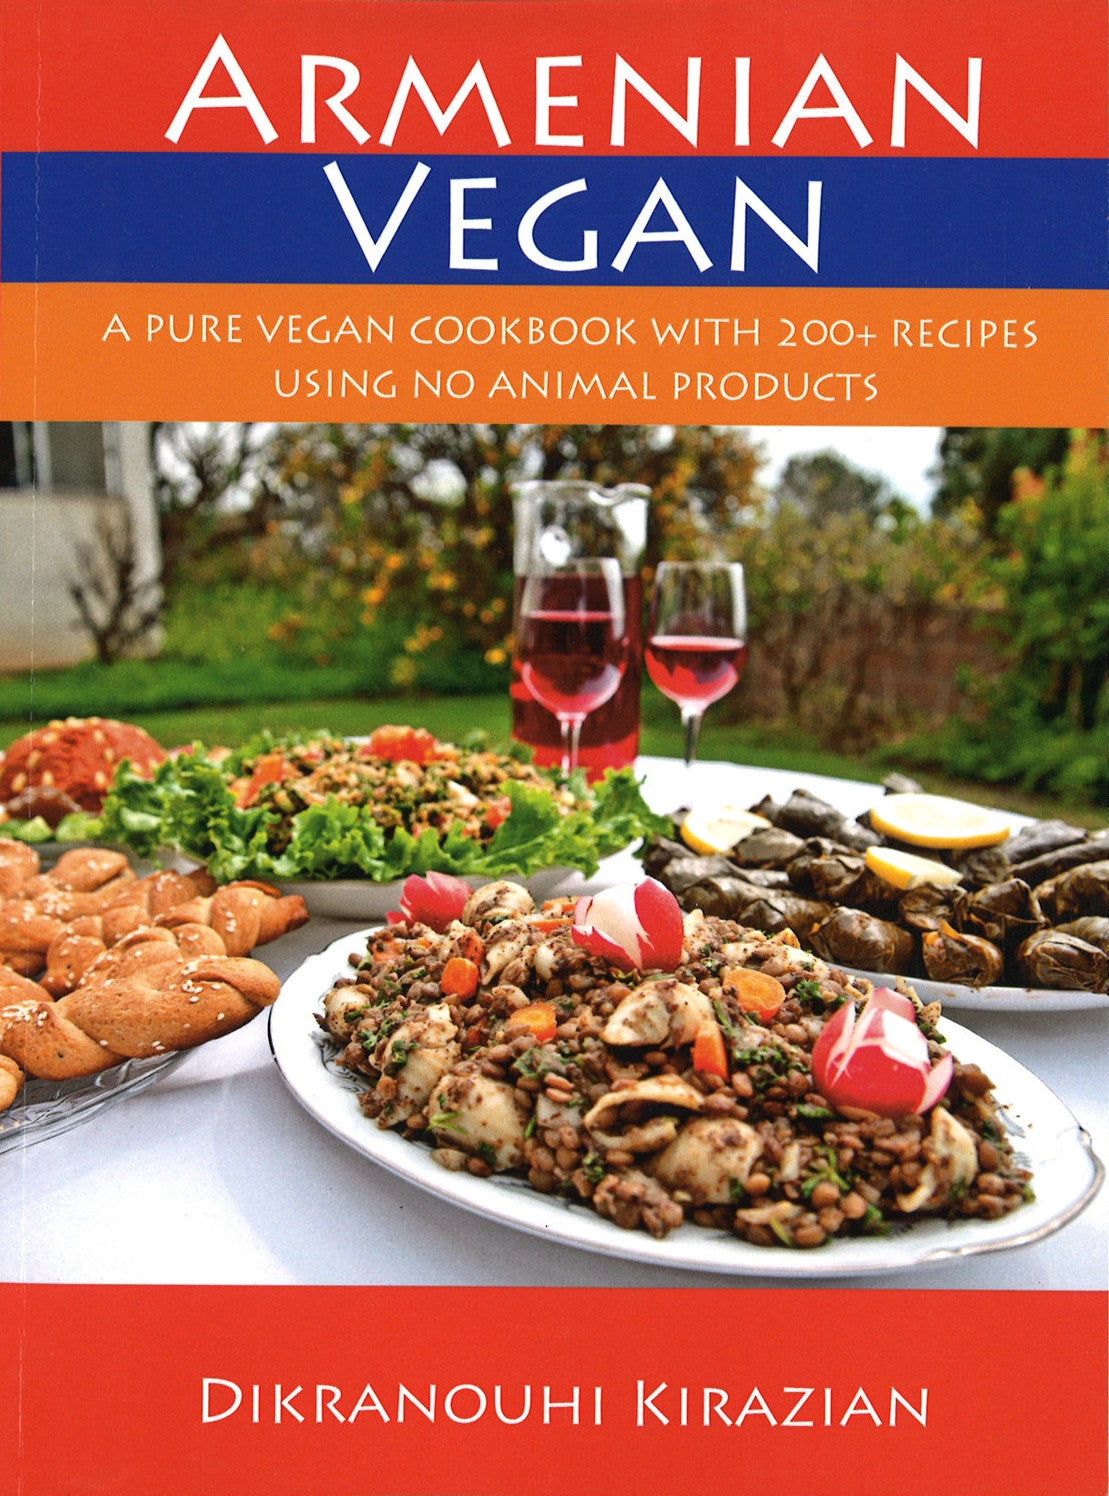 ARMENIAN VEGAN: A Pure Vegan Cookbook with 200+ Recipes using no animal products